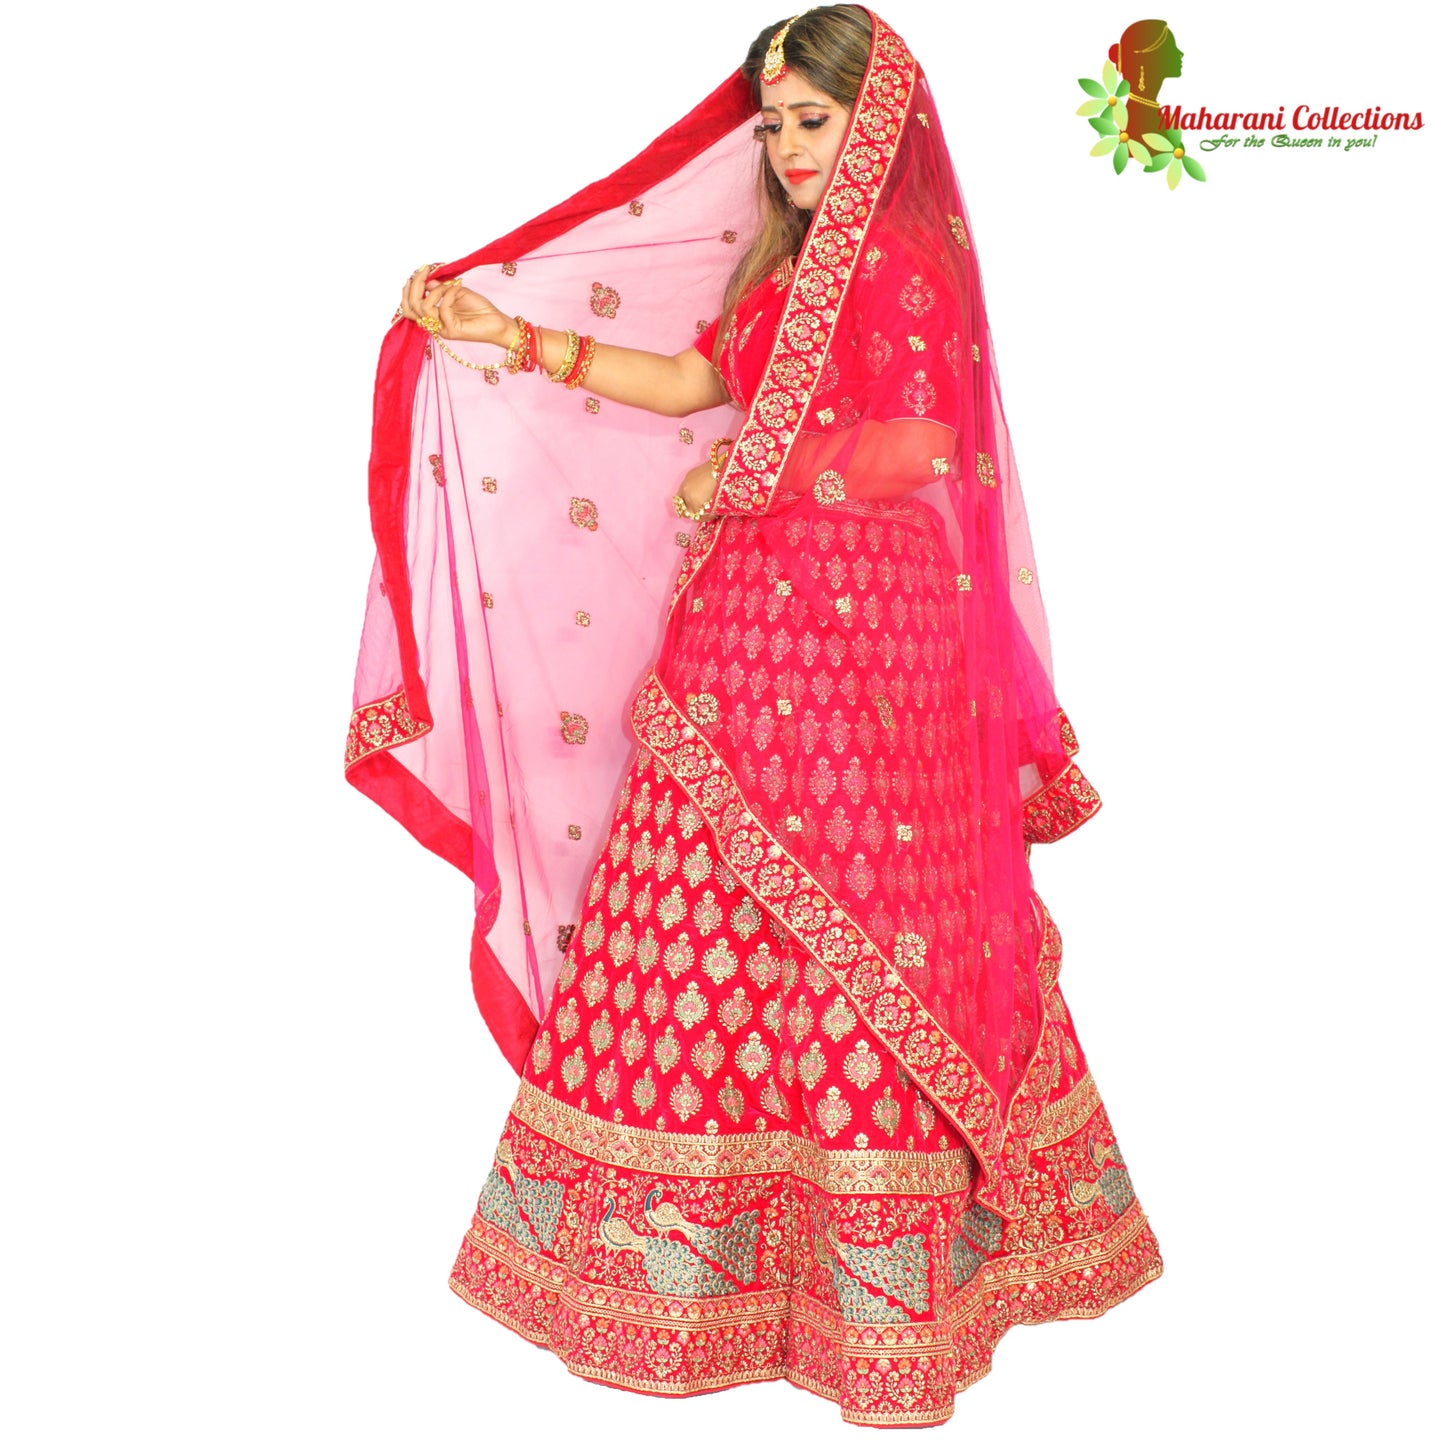 Maharani's Designer Bridal Lehenga - Deep Pink in Velvet (M)